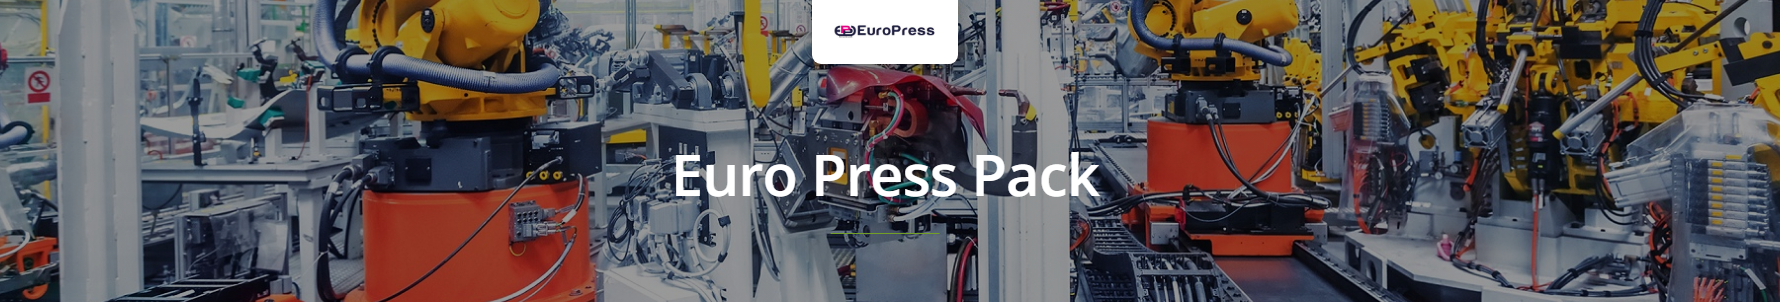 Euro Press Pack Power Packs